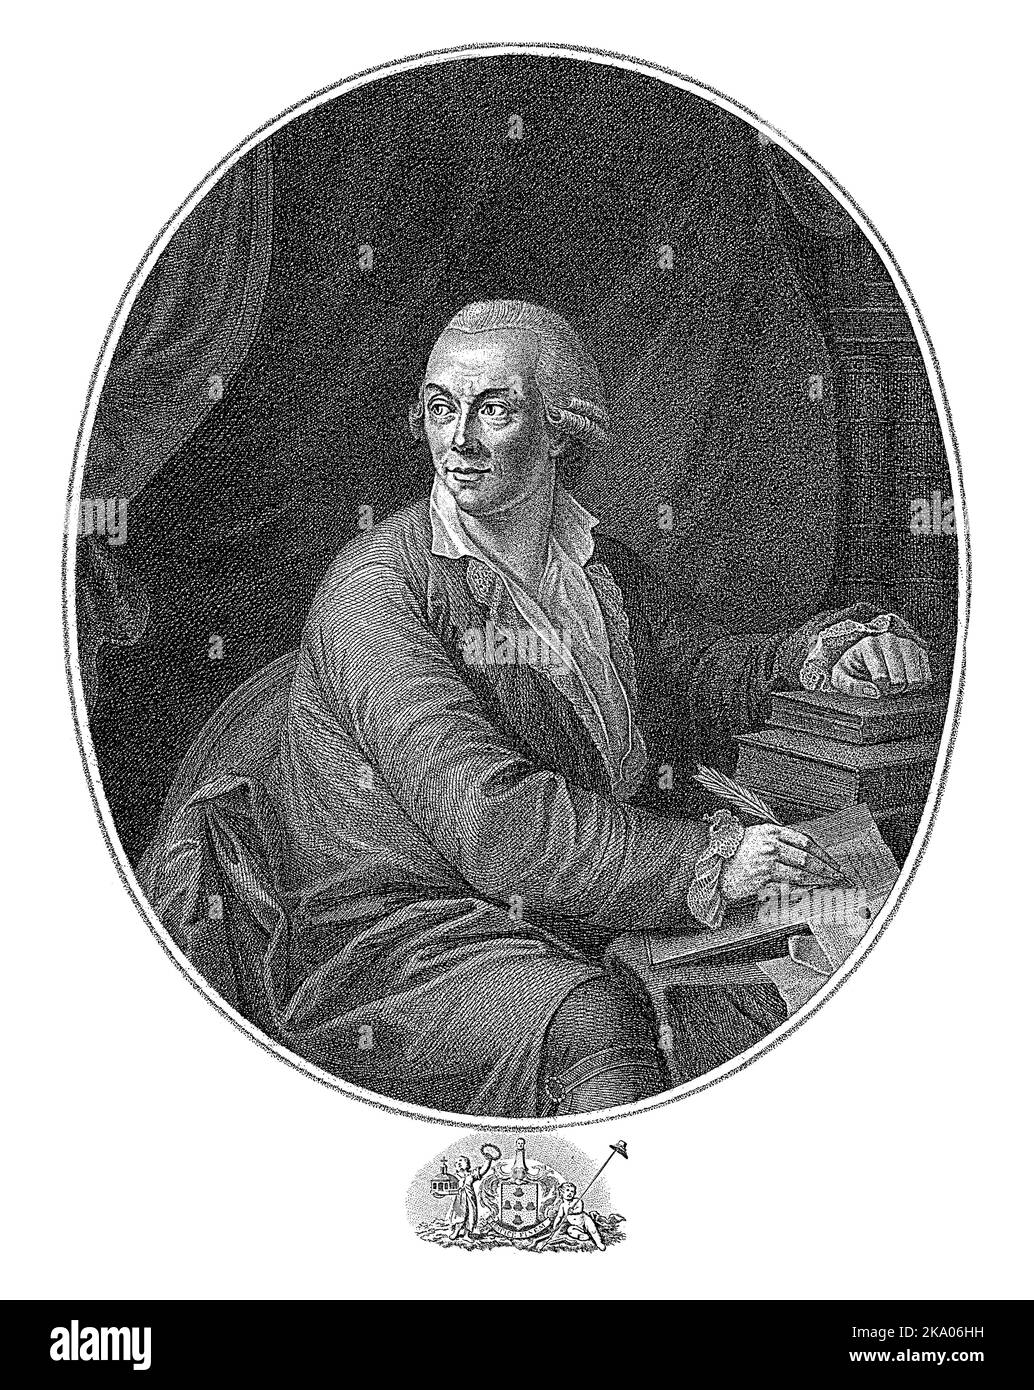 Porträt von Hendrik Karel Nicolaas van der Noot, Theodorus de Roode, nach Pierre de Glimes, 1789 - 1800 Porträt von Hendrik Karel Nicolaas van der No Stockfoto